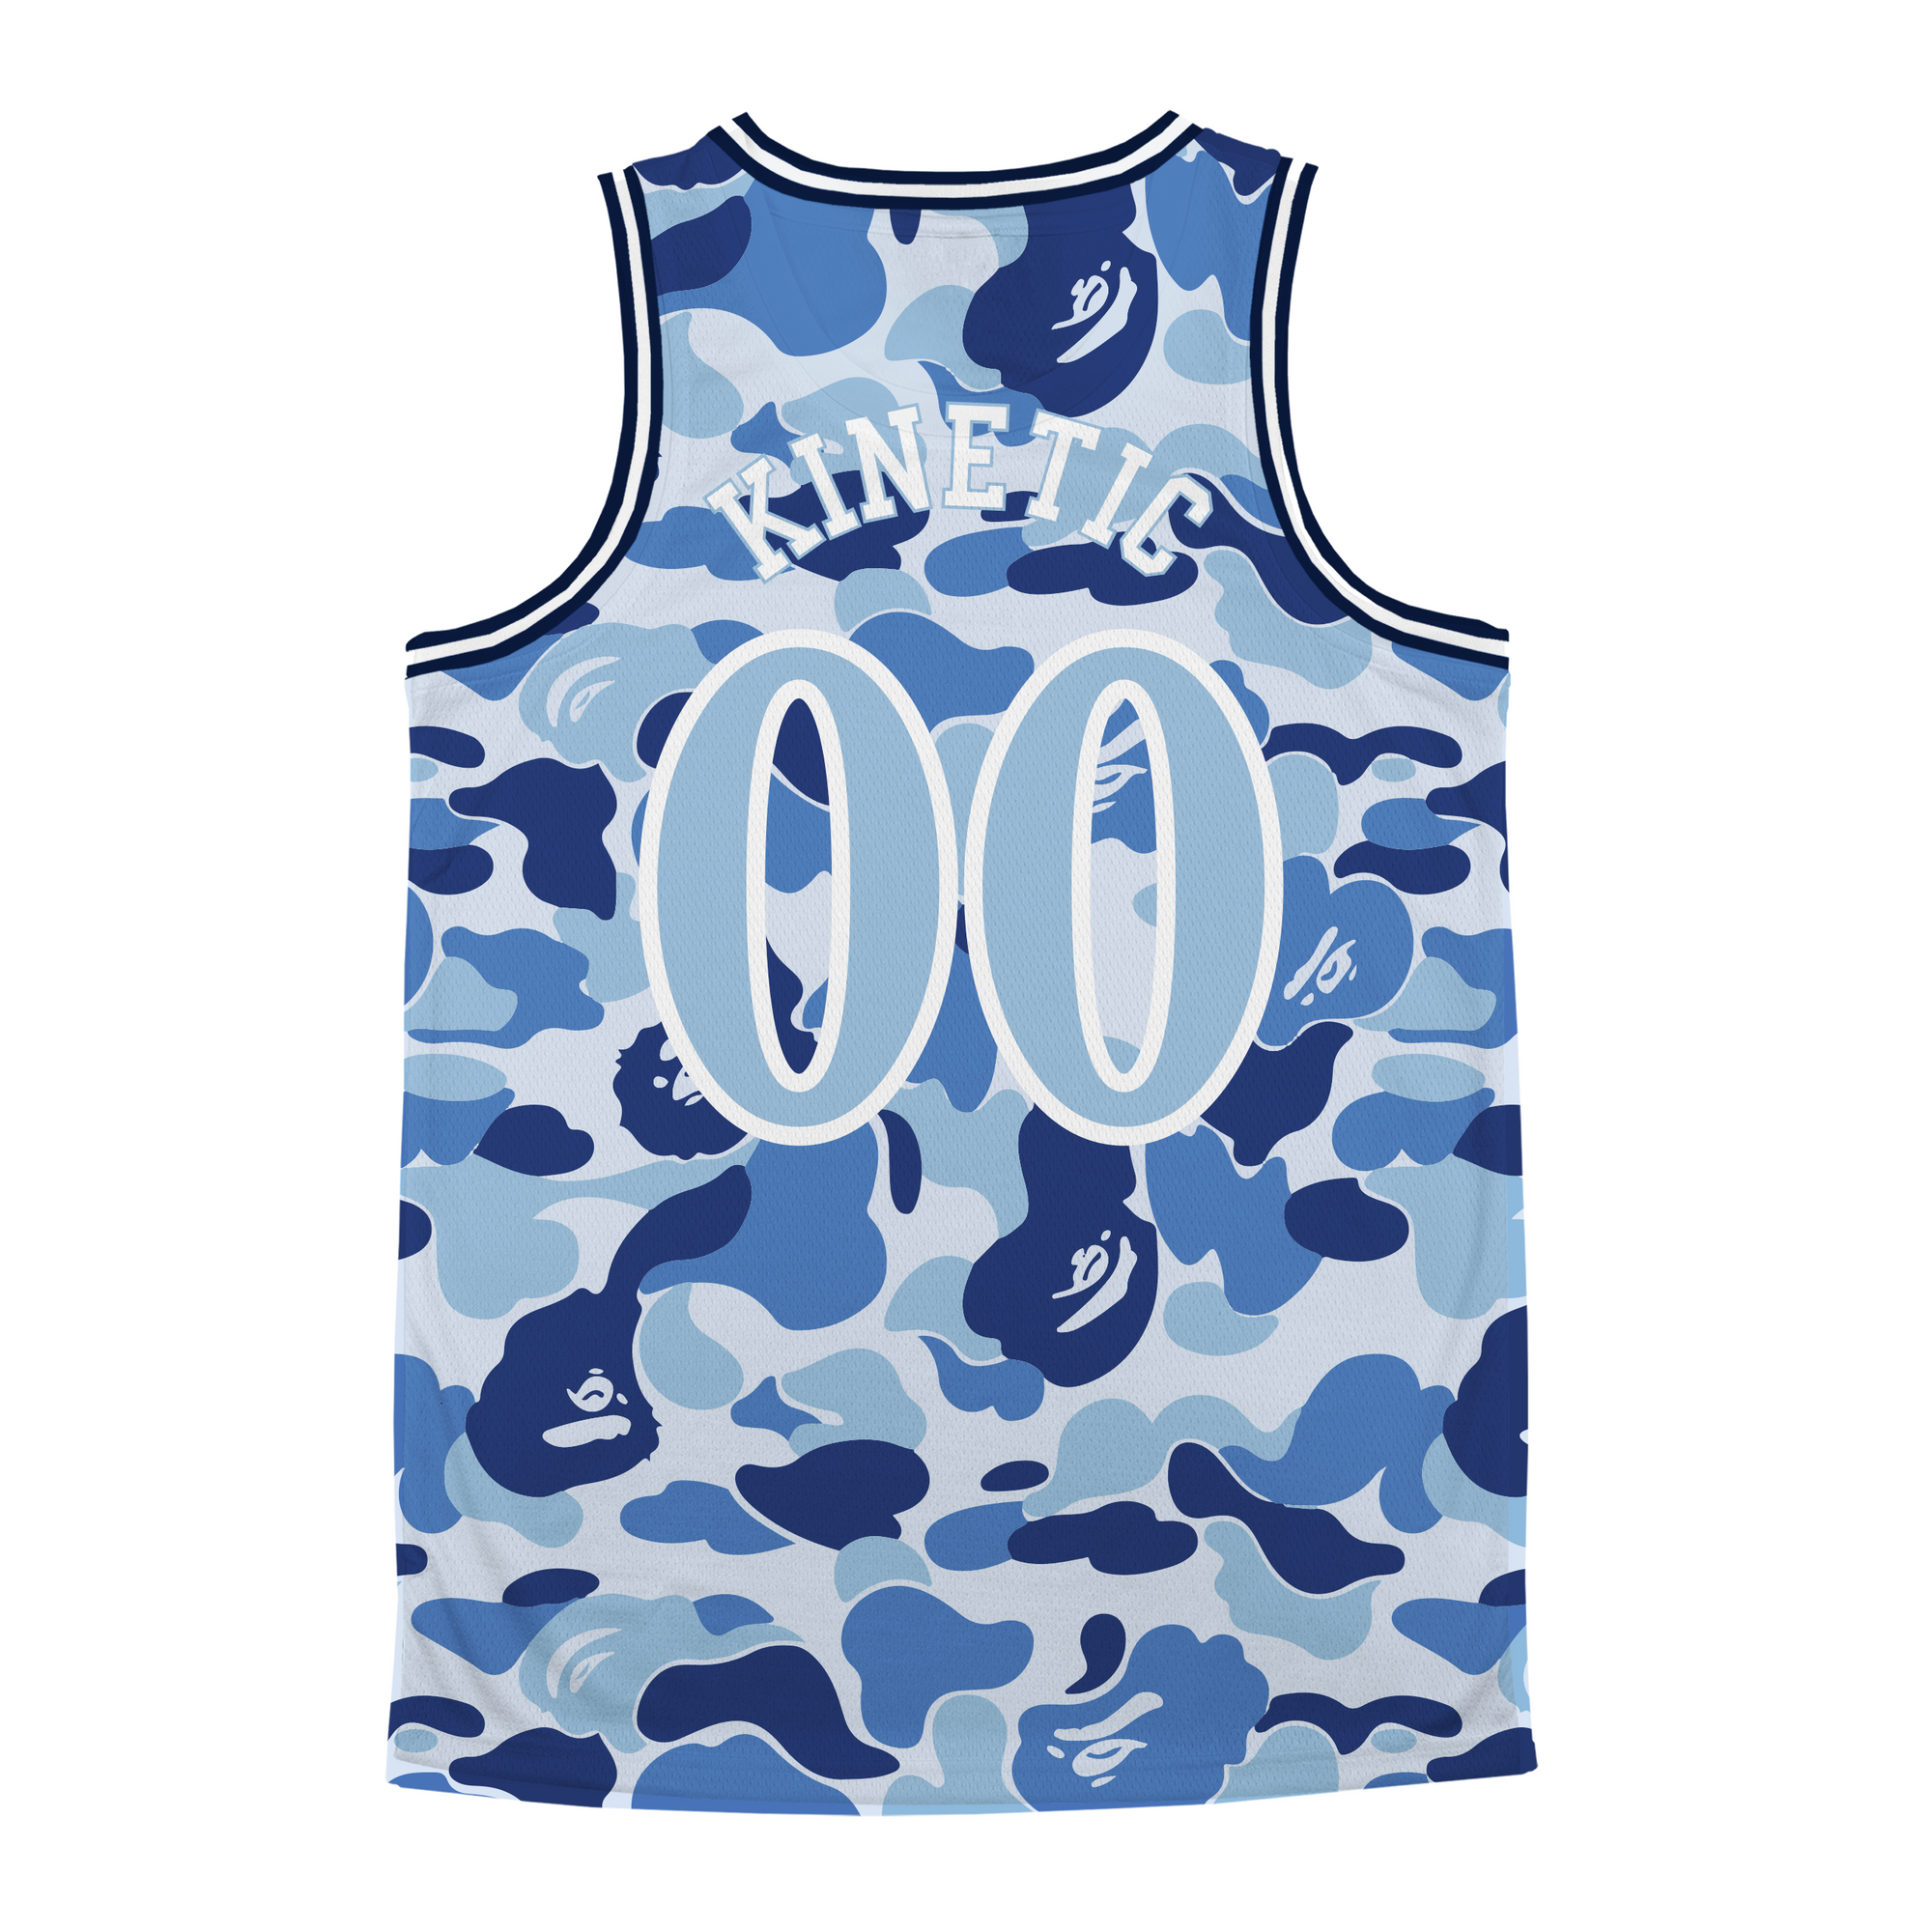 Kappa Alpha Order - Blue Camo Basketball Jersey